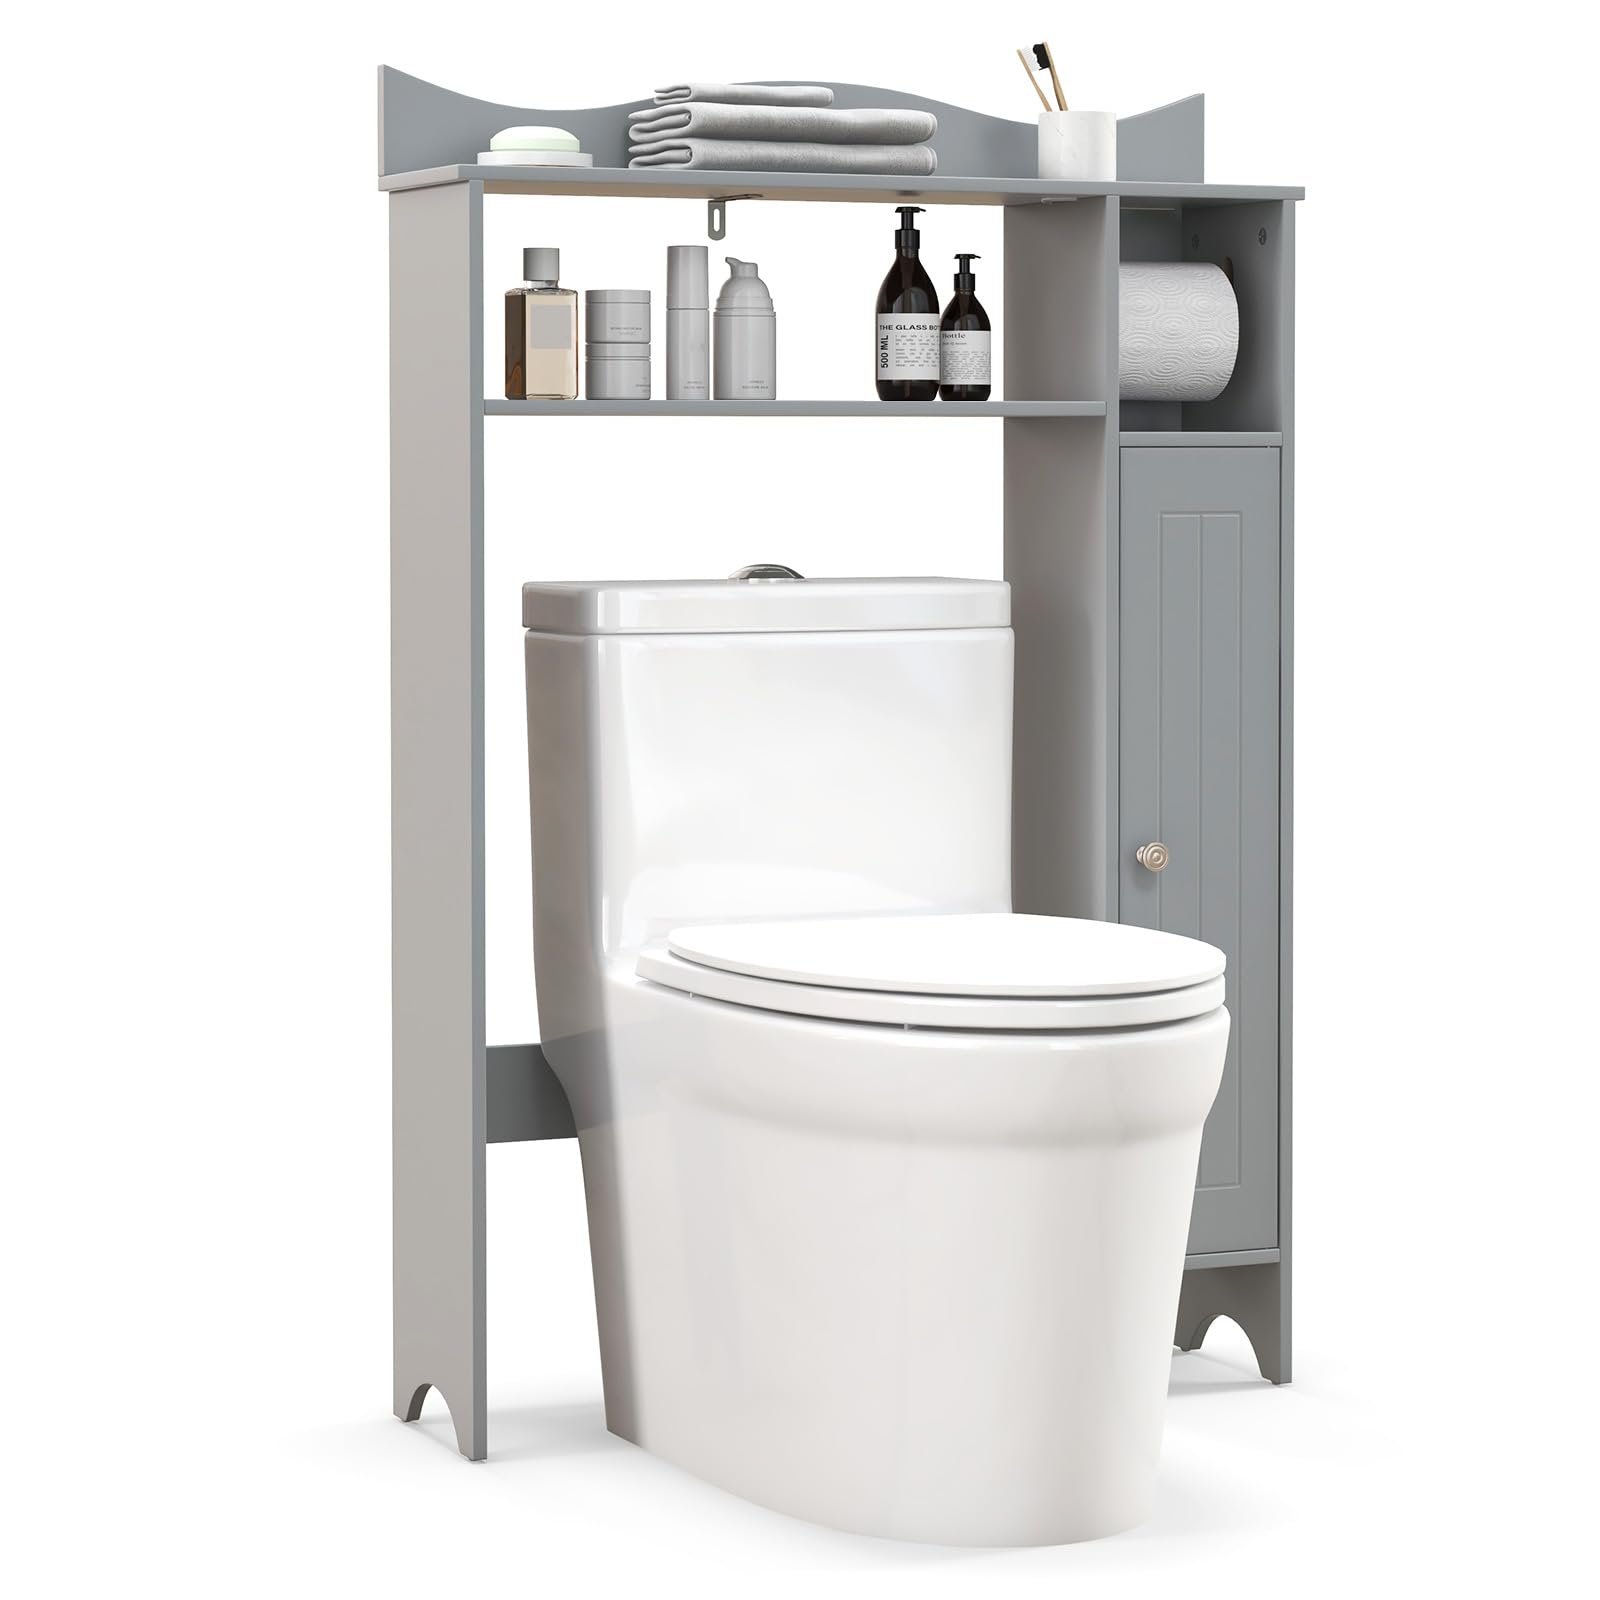 Giantex Over-The-Toilet Storage Cabinet, Bathroom Freestanding Space Saver with 1-Door Side Storage Cabinet & Paper Holder